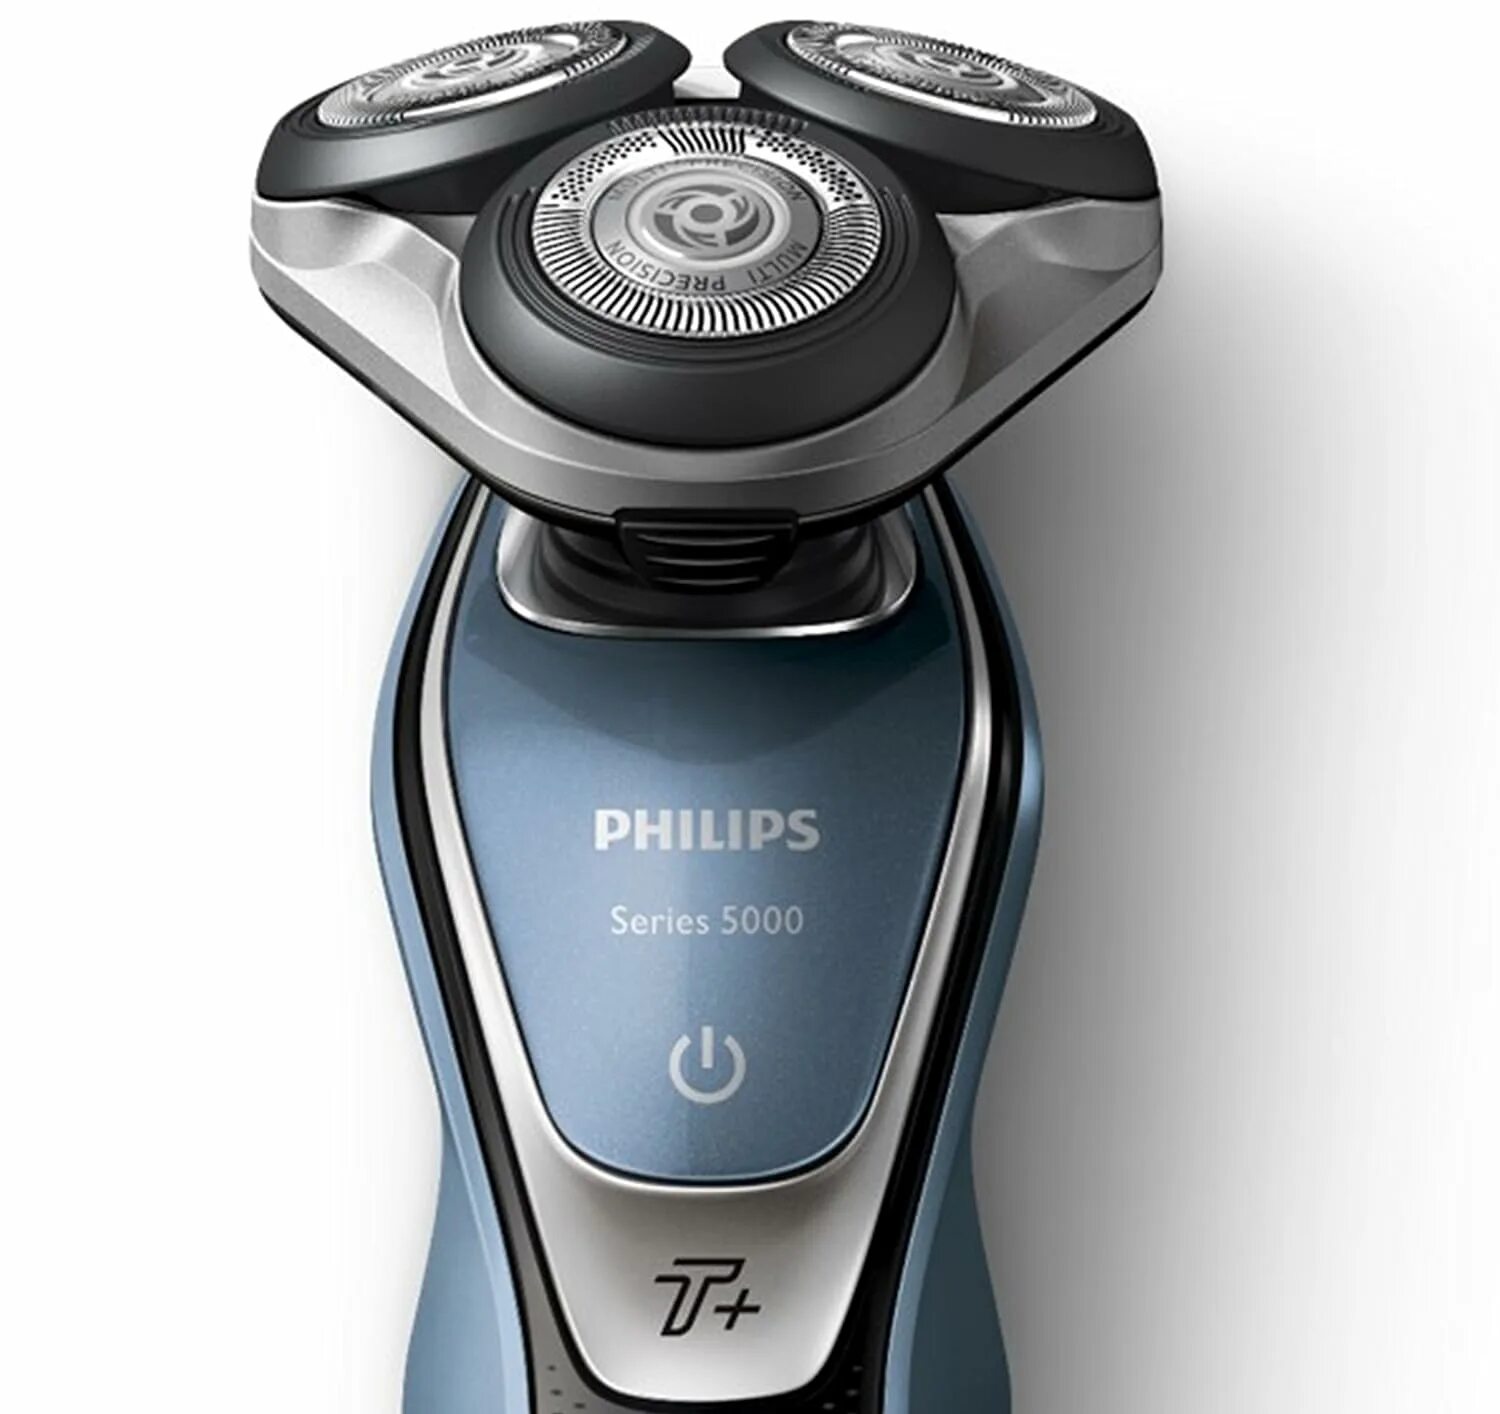 Philips series 5000. Philips s5000 электробритва. Филипс Сериес 5000. Philips Shaver Series 5000. Электробритва Филипс 5000.